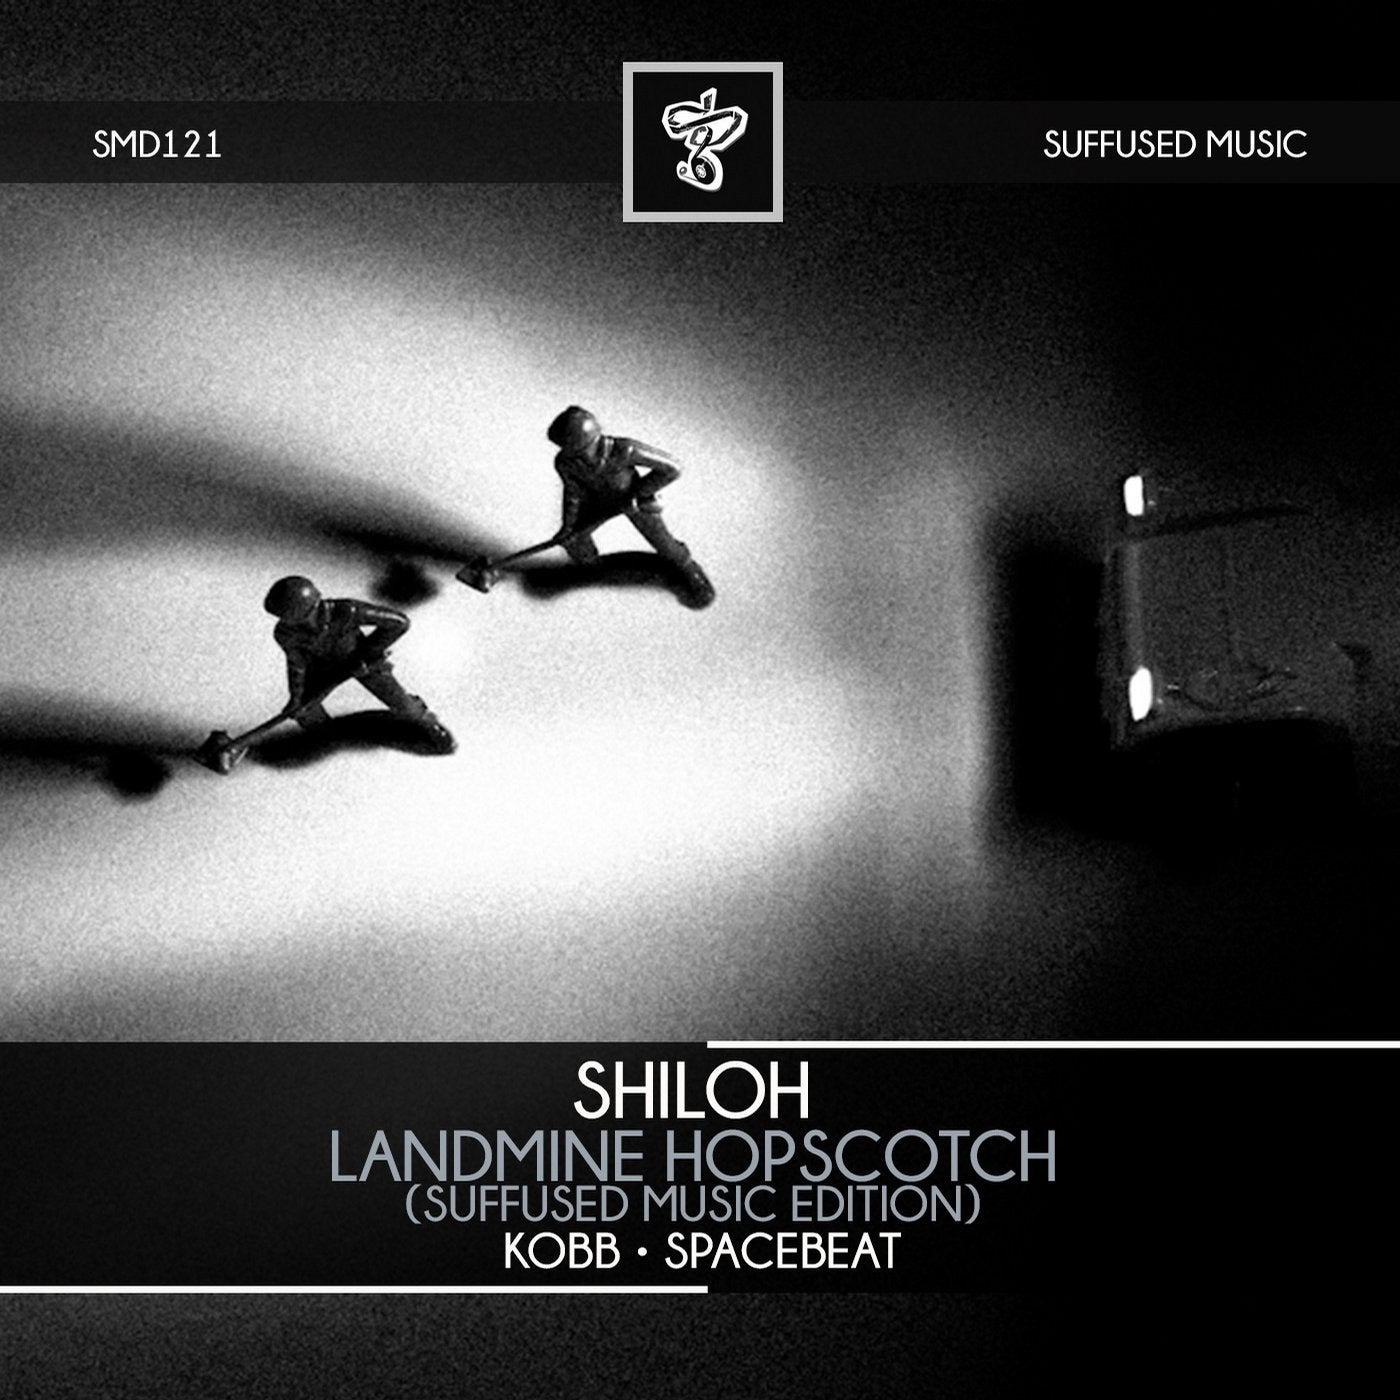 Landmine Hopscotch (Suffused Music Edition)